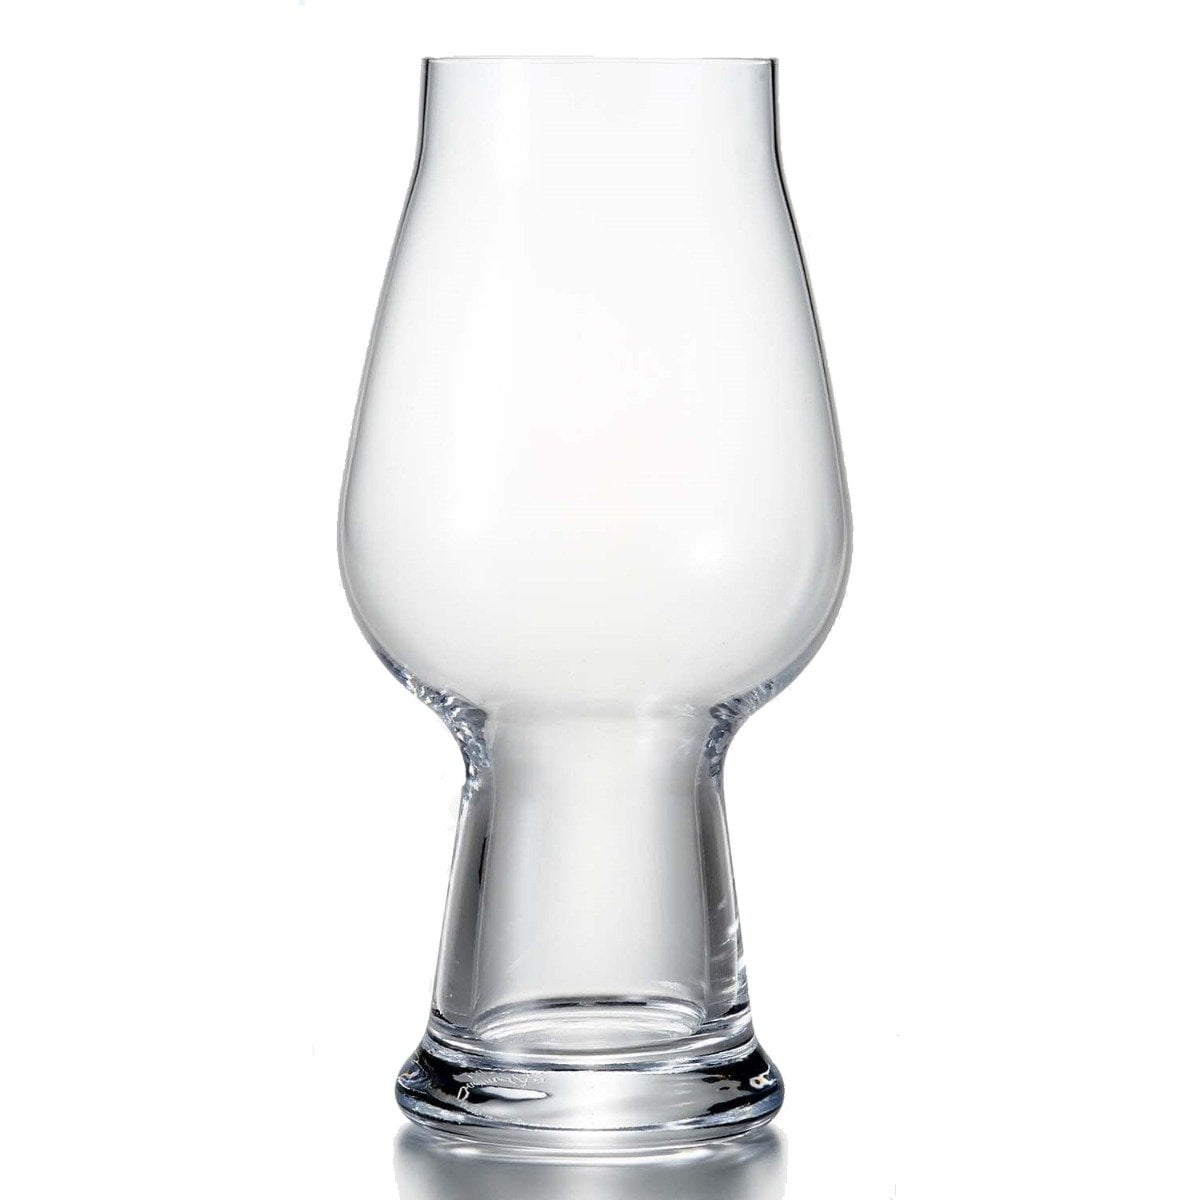 Birrateque 18.25 oz IPA Beer Glasses (Set Of 2)– Luigi Bormioli Corp.